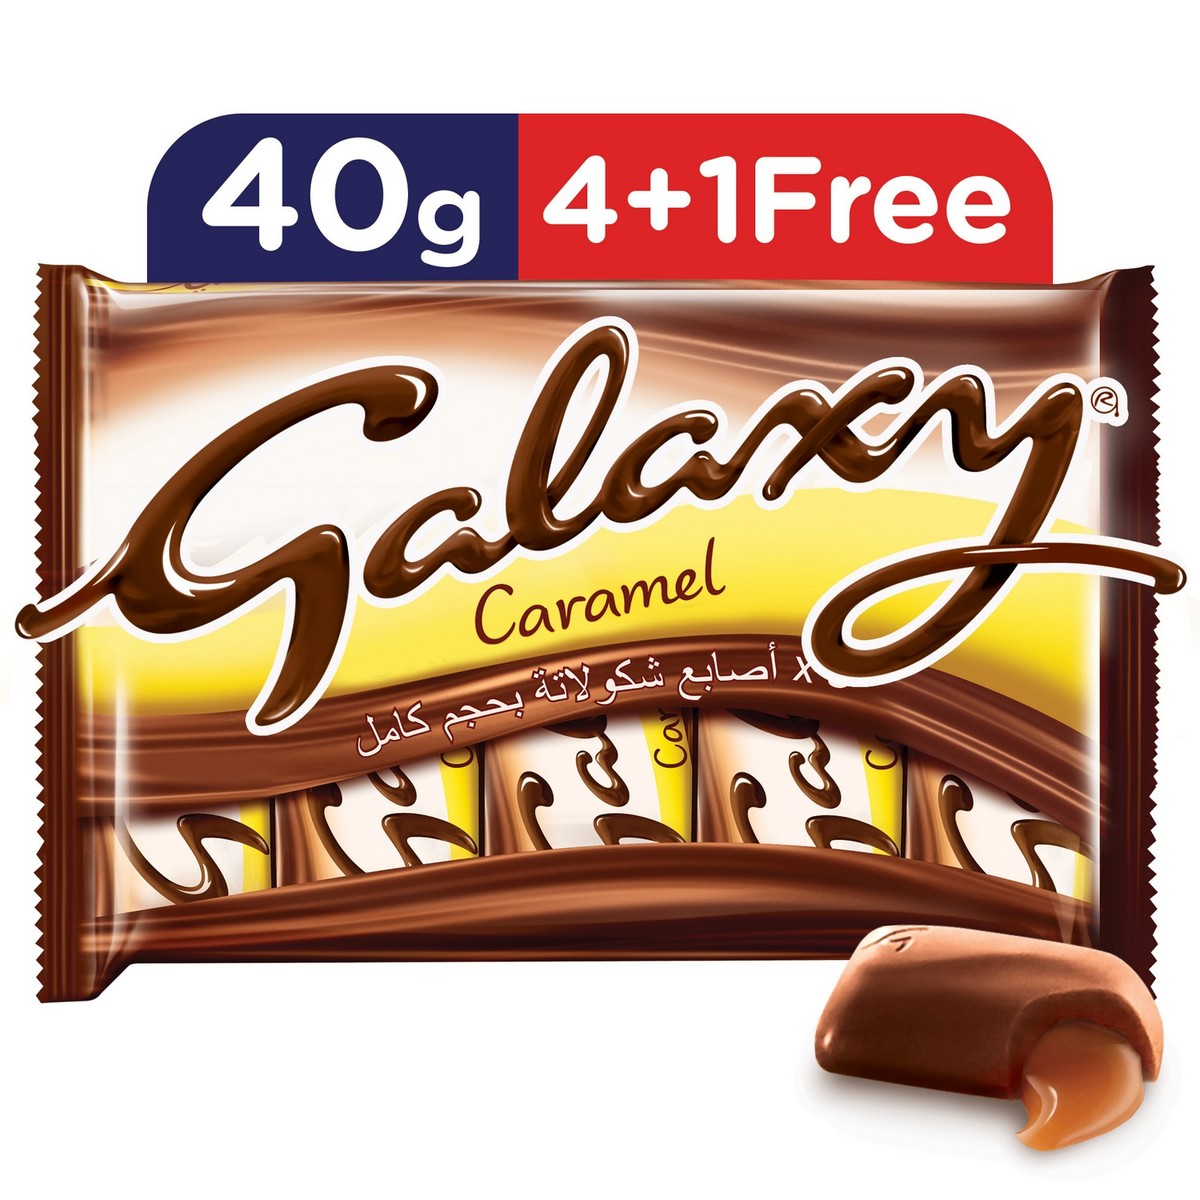 Galaxy Caramel Chocolate Bars 40g x 5pcs